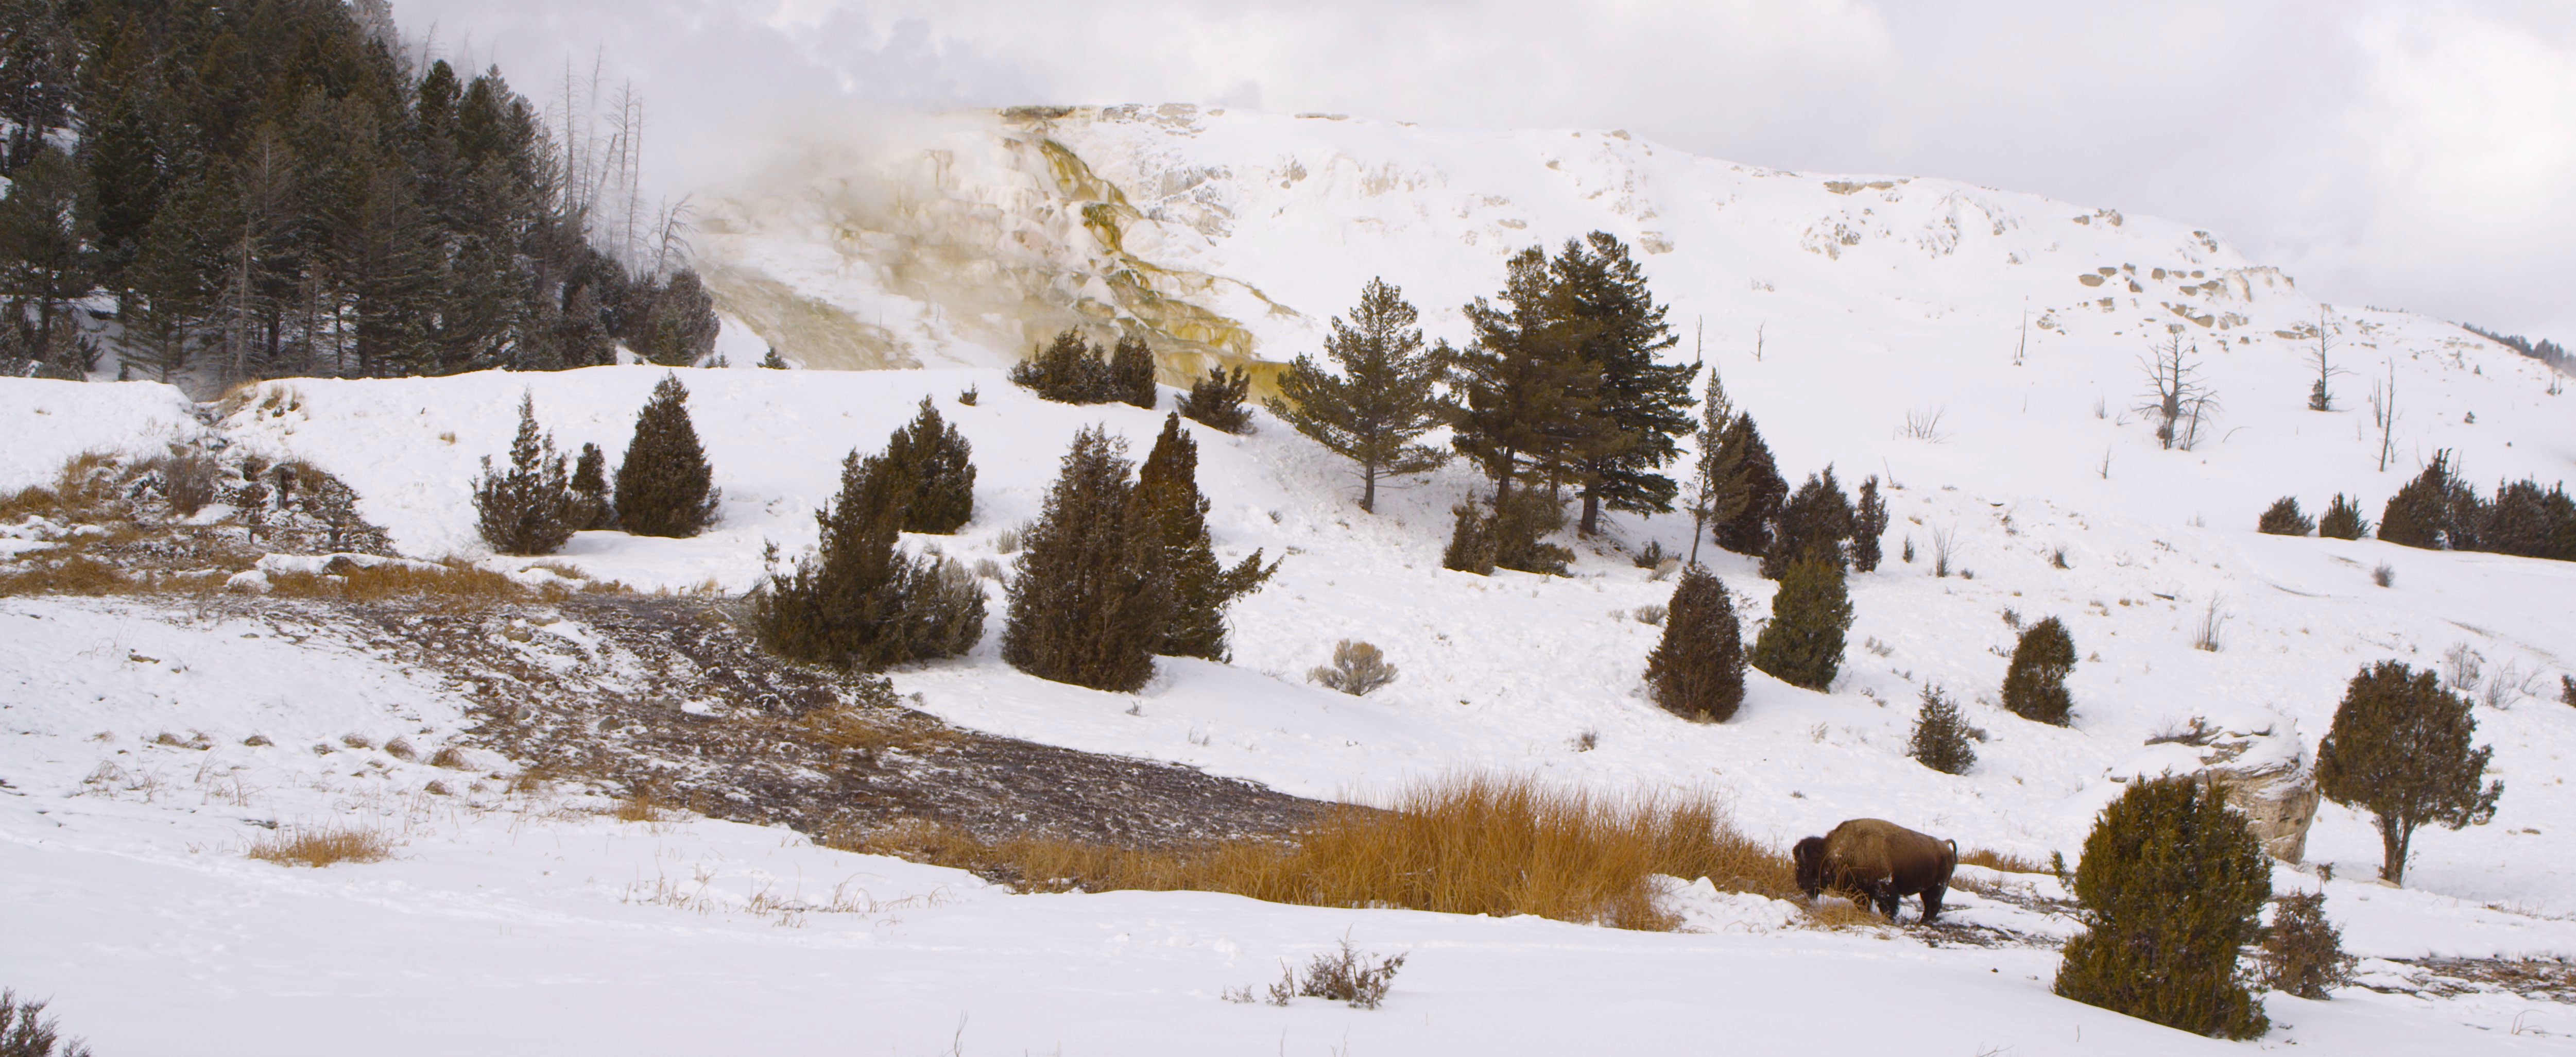 Yellowstone National Park, Winter 2014